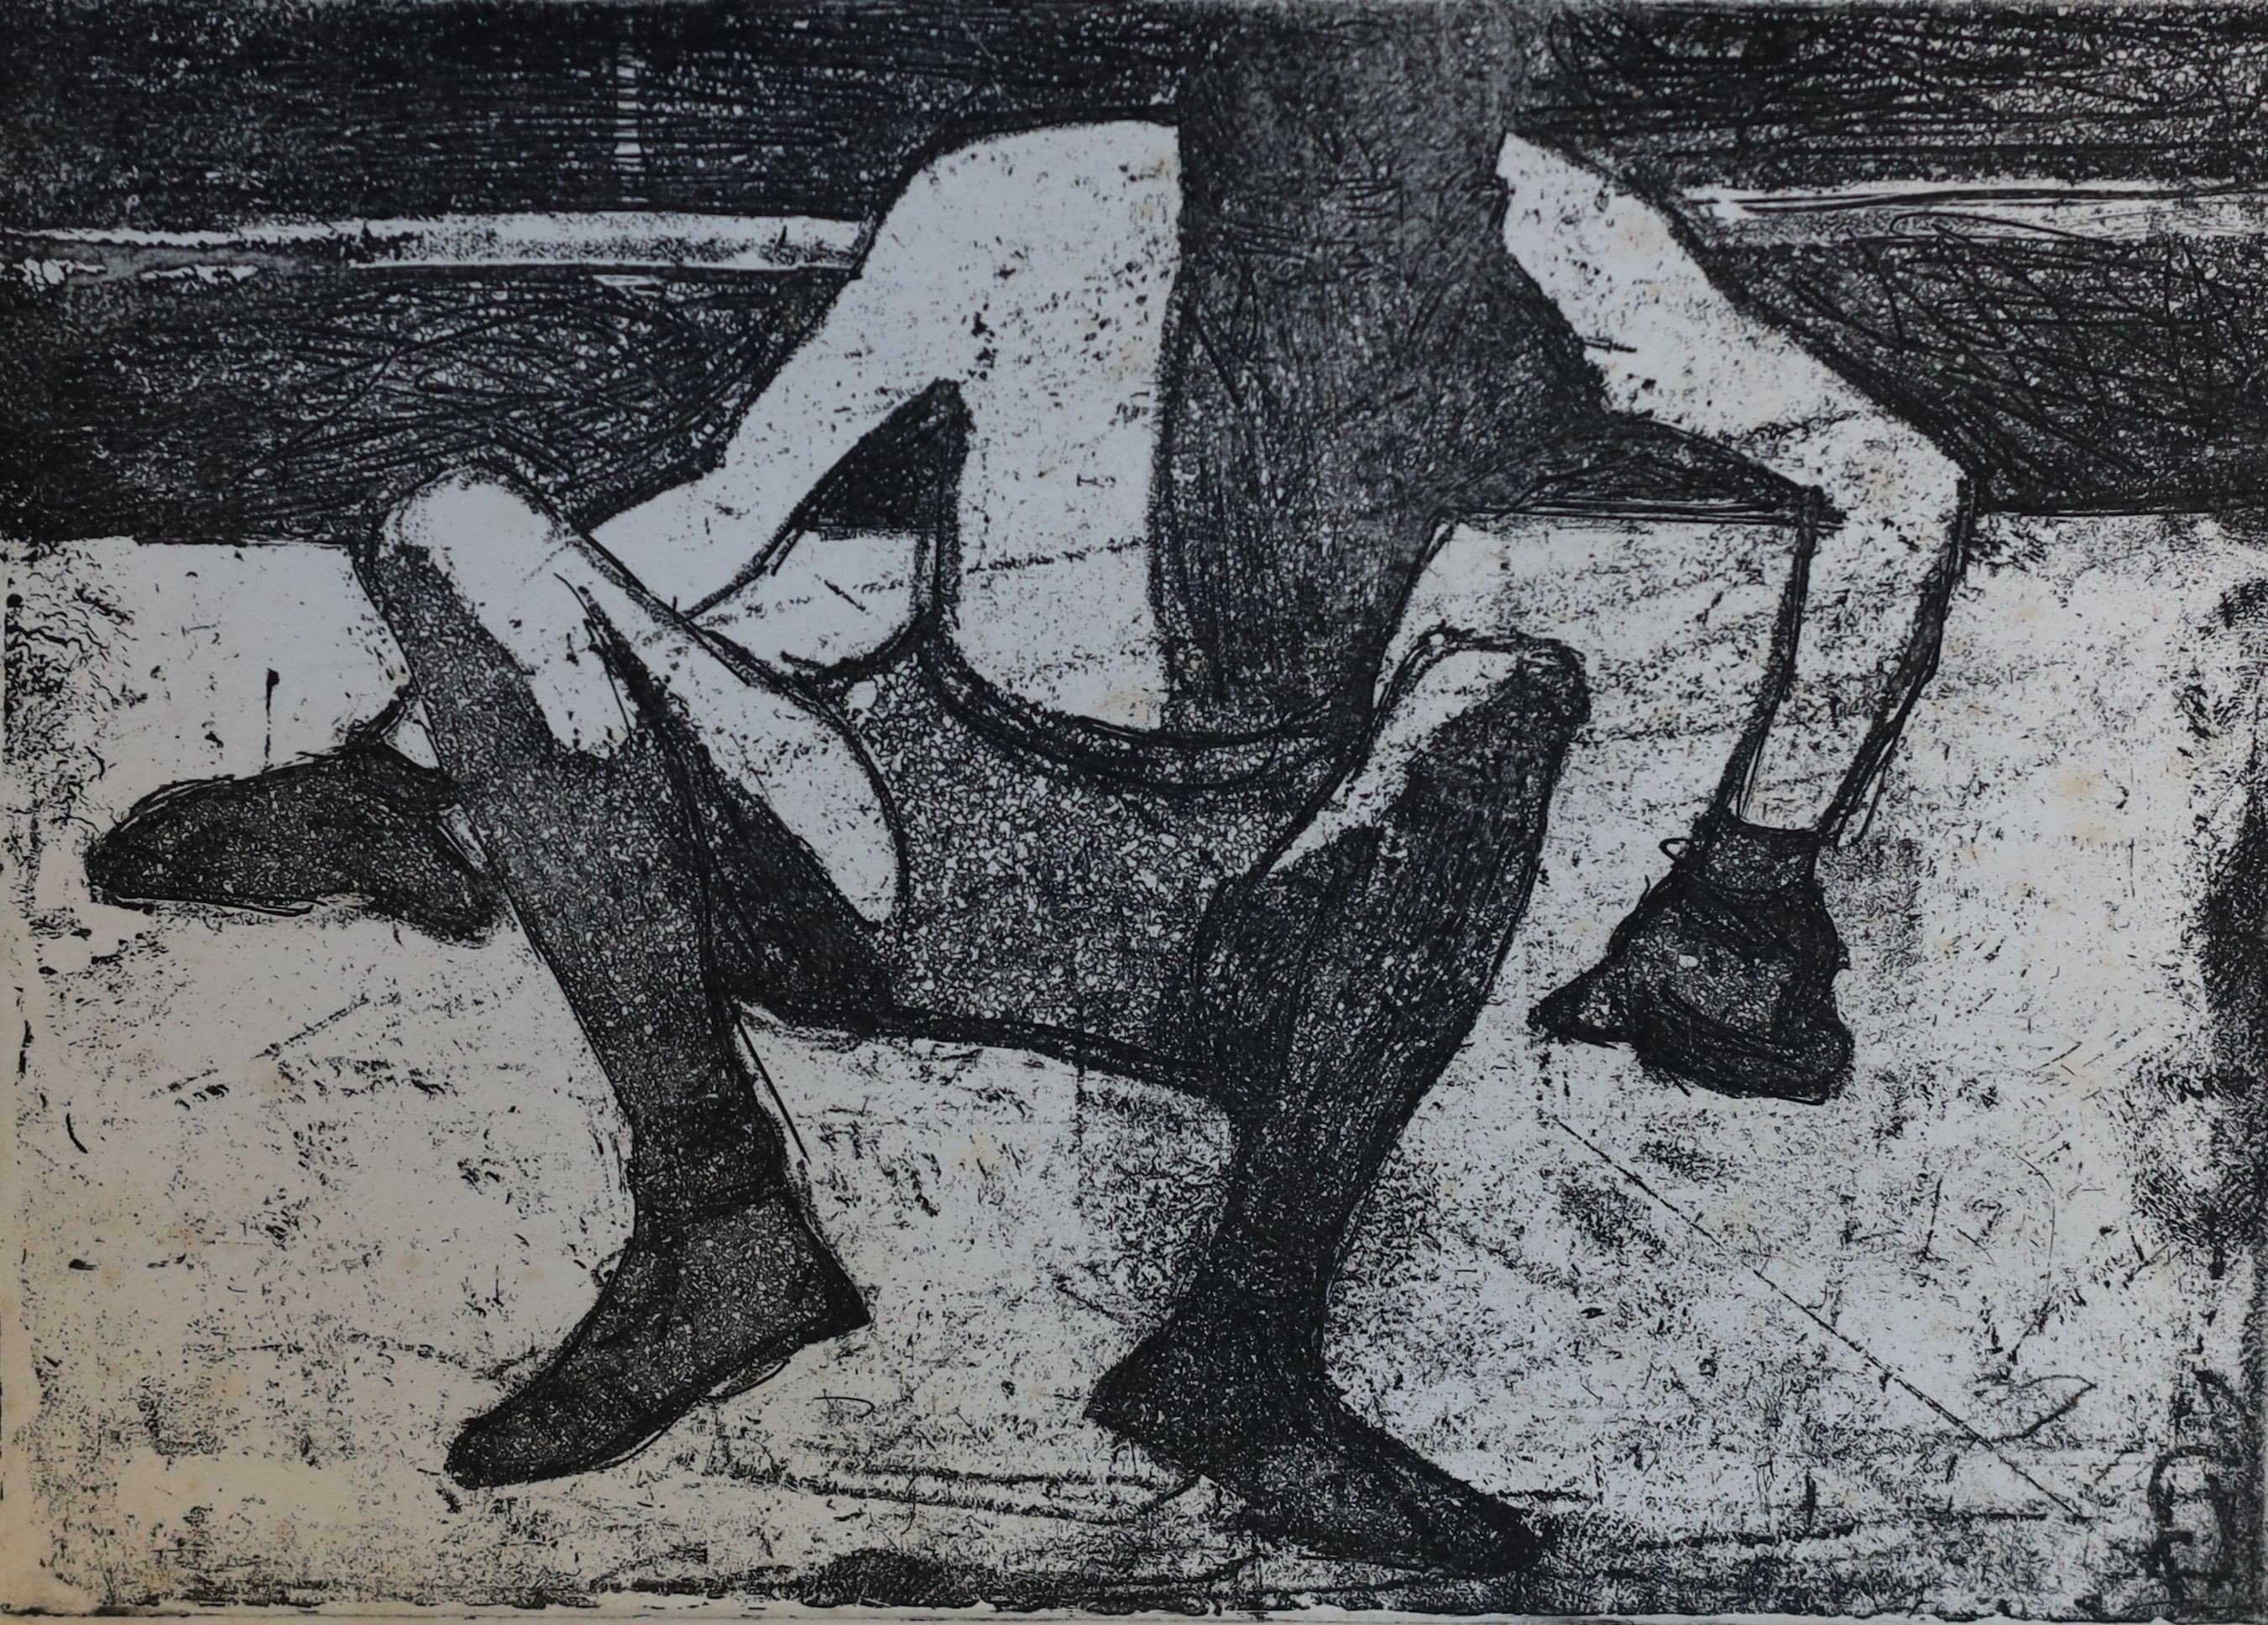 Sam Rabin (1903-1991), Study for Tense Moment, pencil and Conte crayon